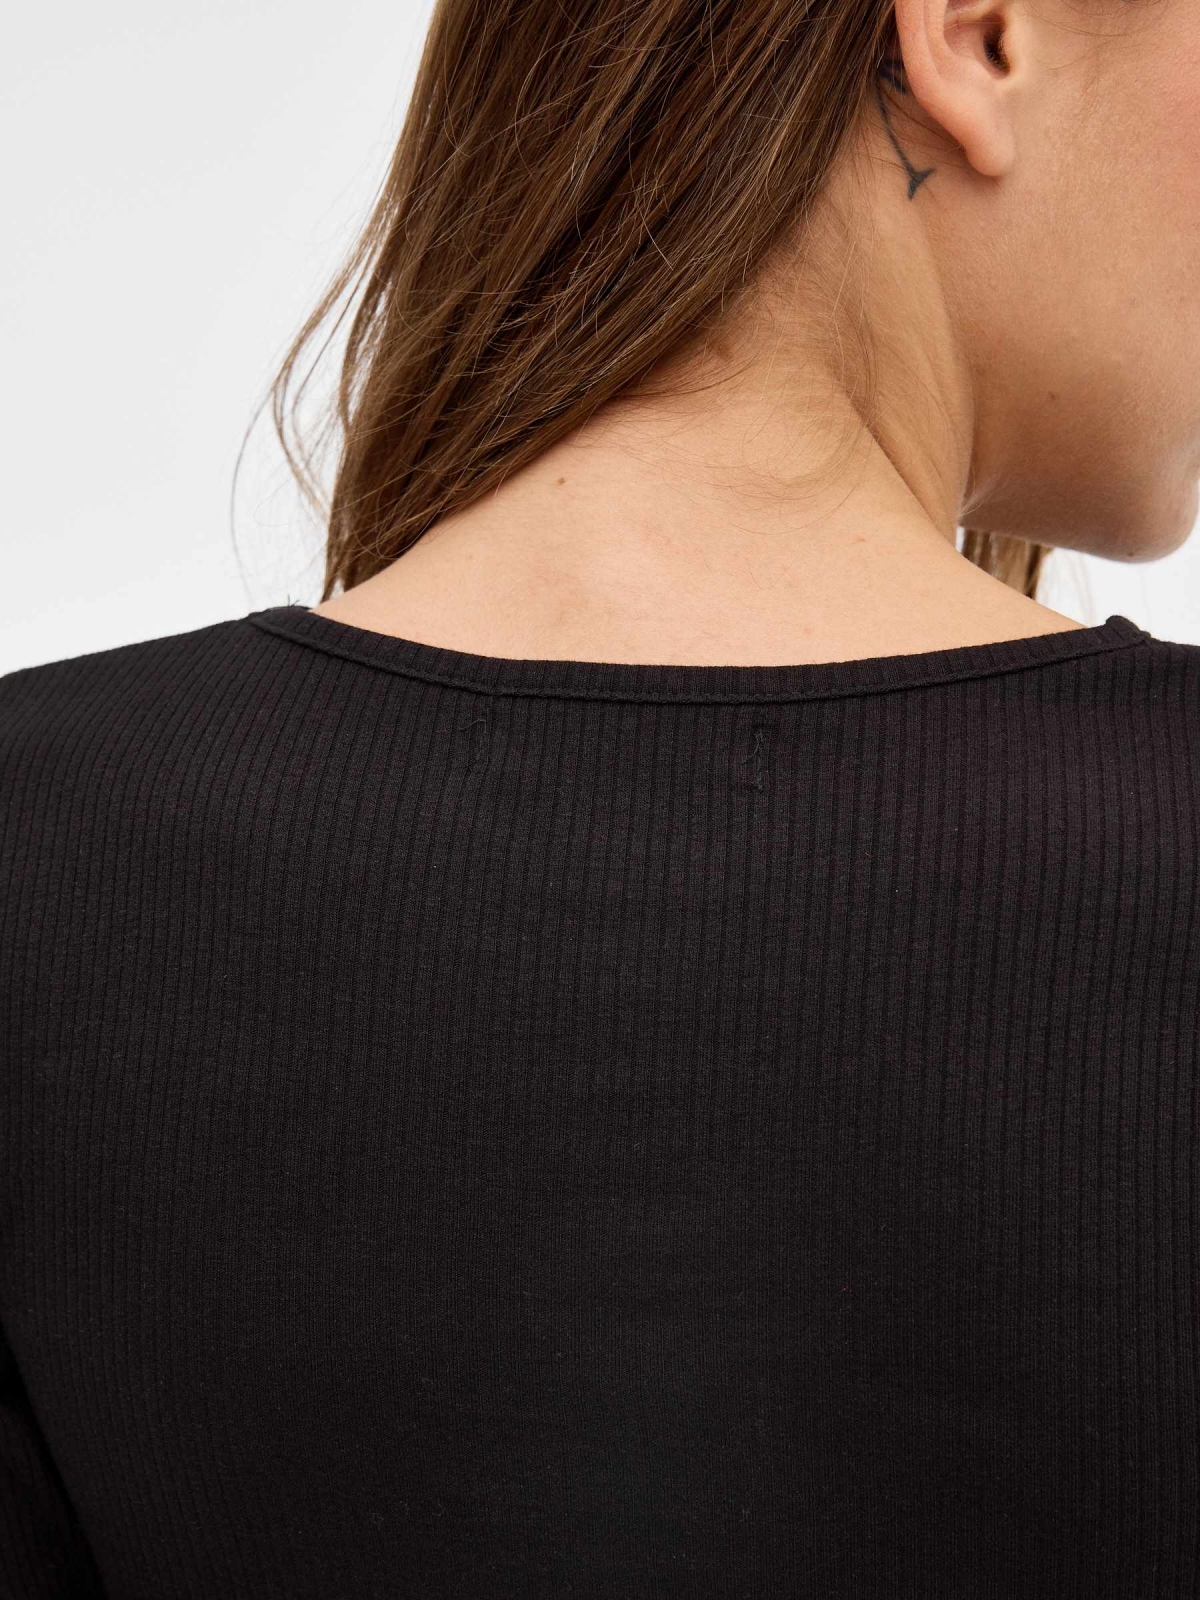 Rib t-shirt cut out neckline black detail view